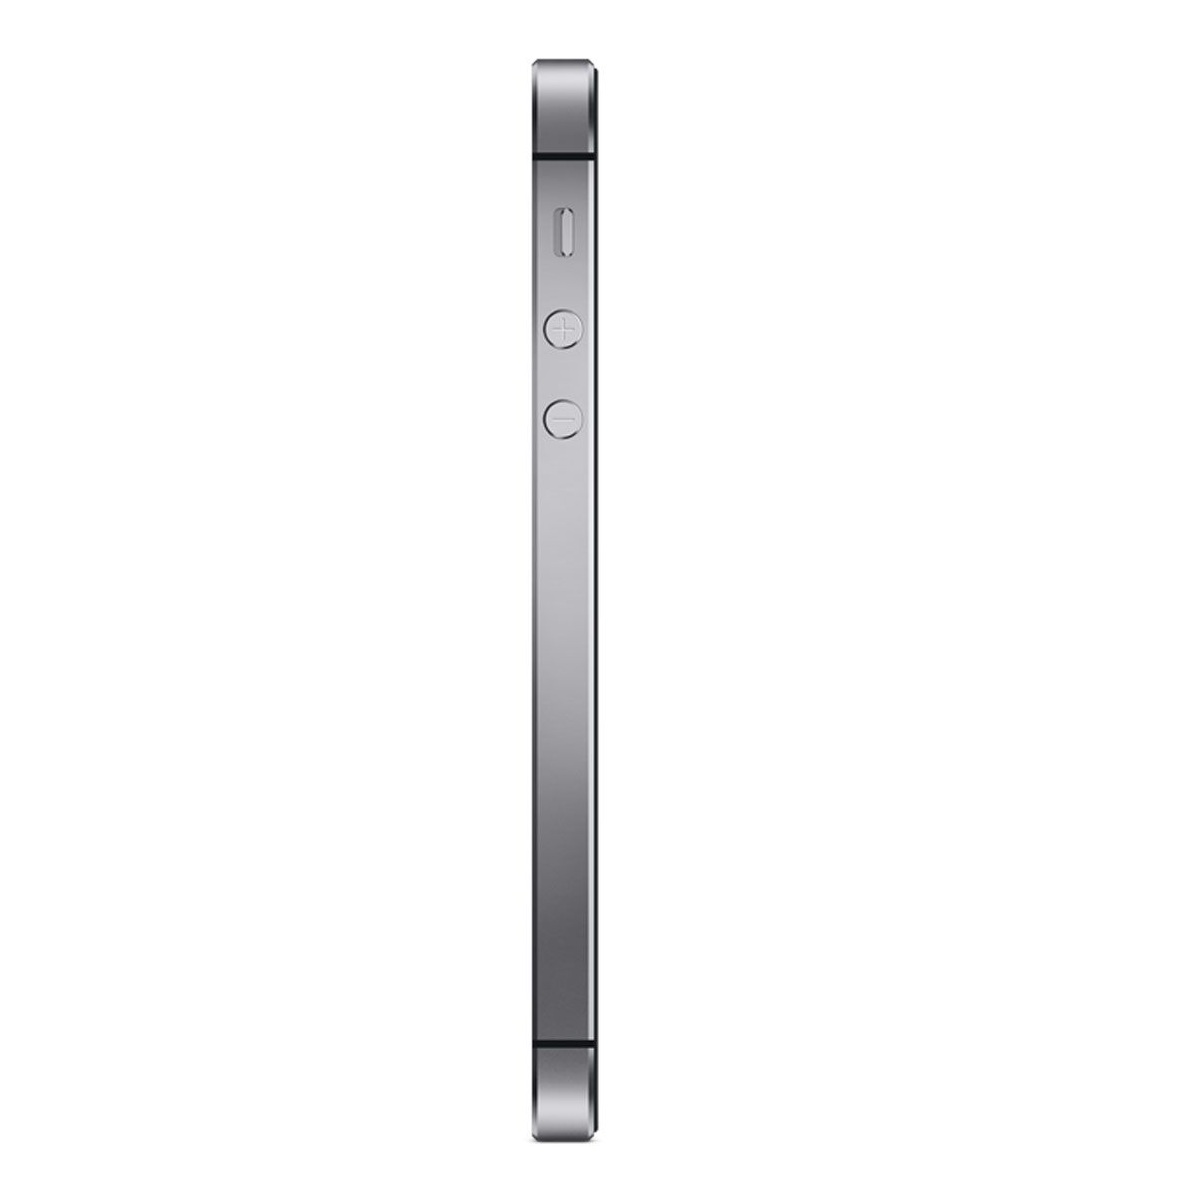 Смартфон Apple iPhone 5S 32Gb RFB (как новый) Space Grey (FF355RU/A) 